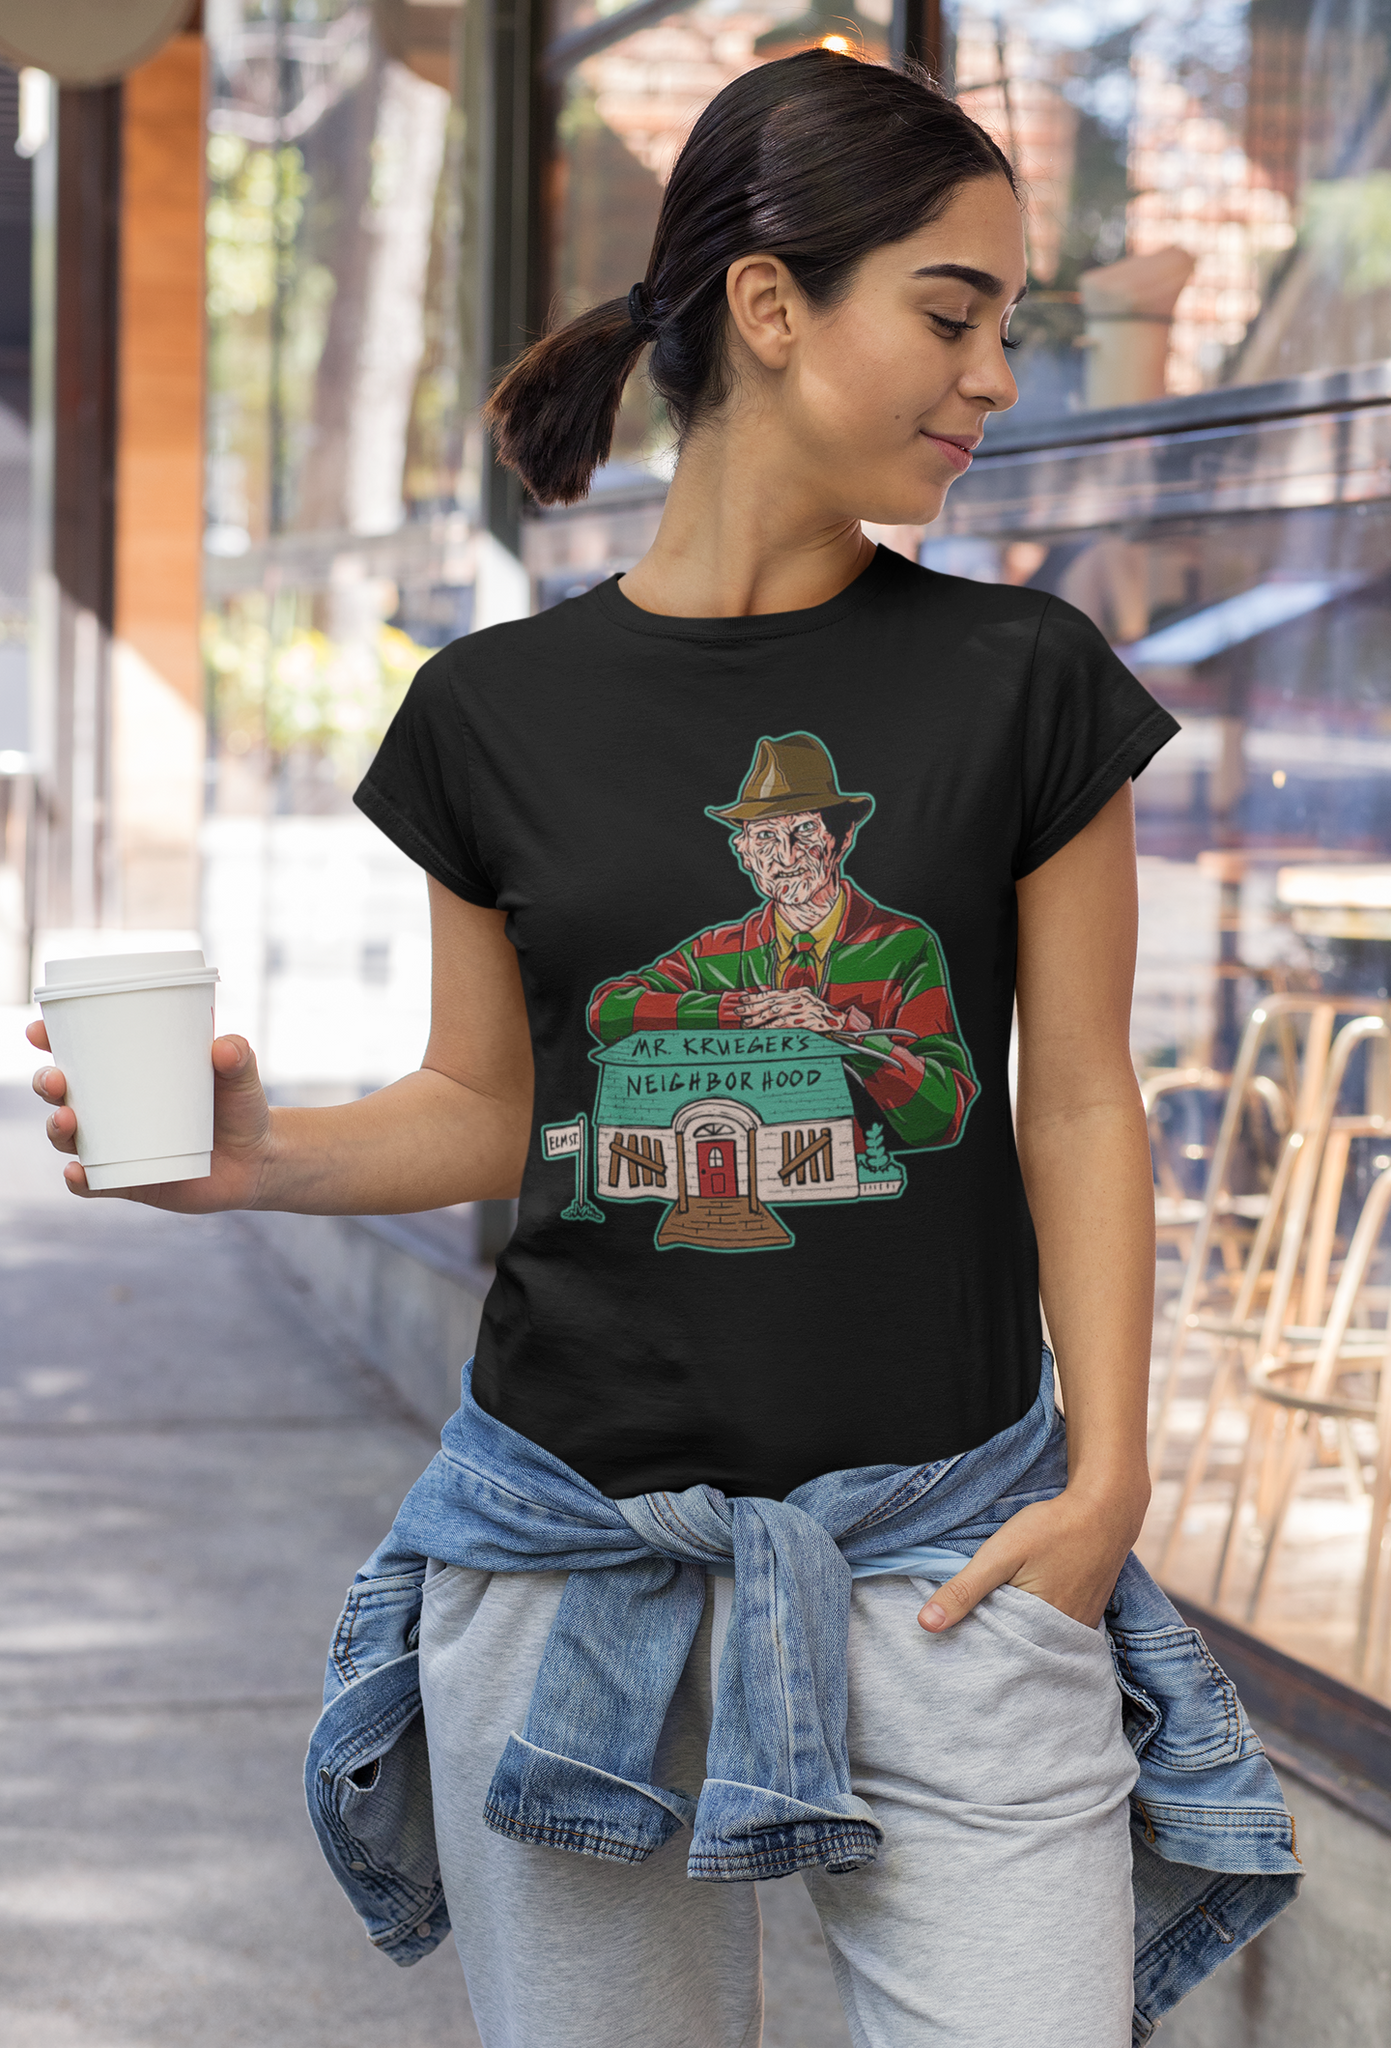 Nightmare On Elm Street T Shirt, Freddy Krueger T Shirt, Mr Krueger Neighborhood Tshirt, Halloween Gifts